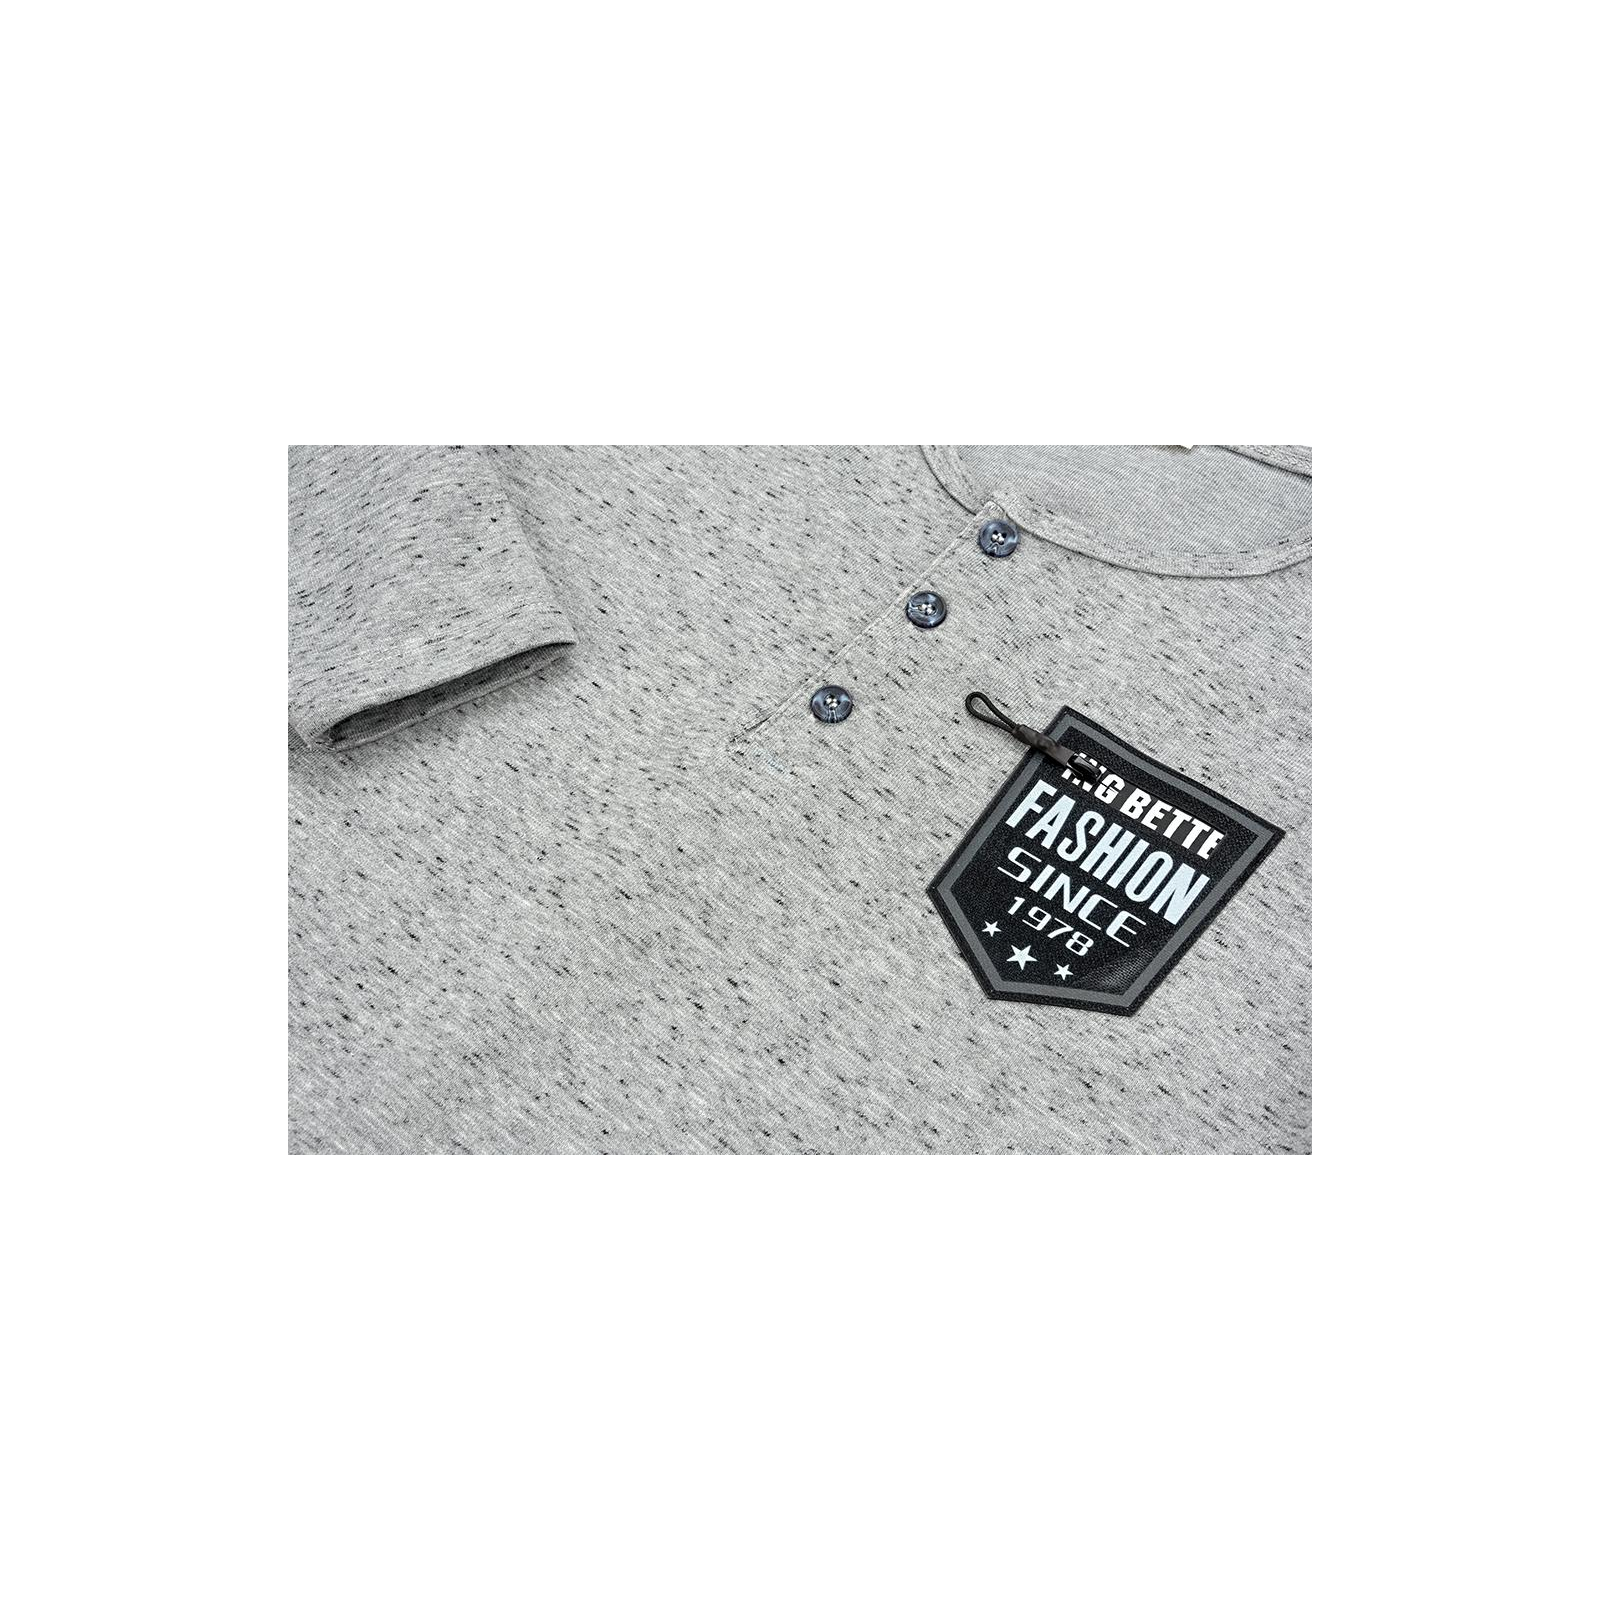 Кофта Breeze с карманчиком (11661-140B-gray) изображение 4